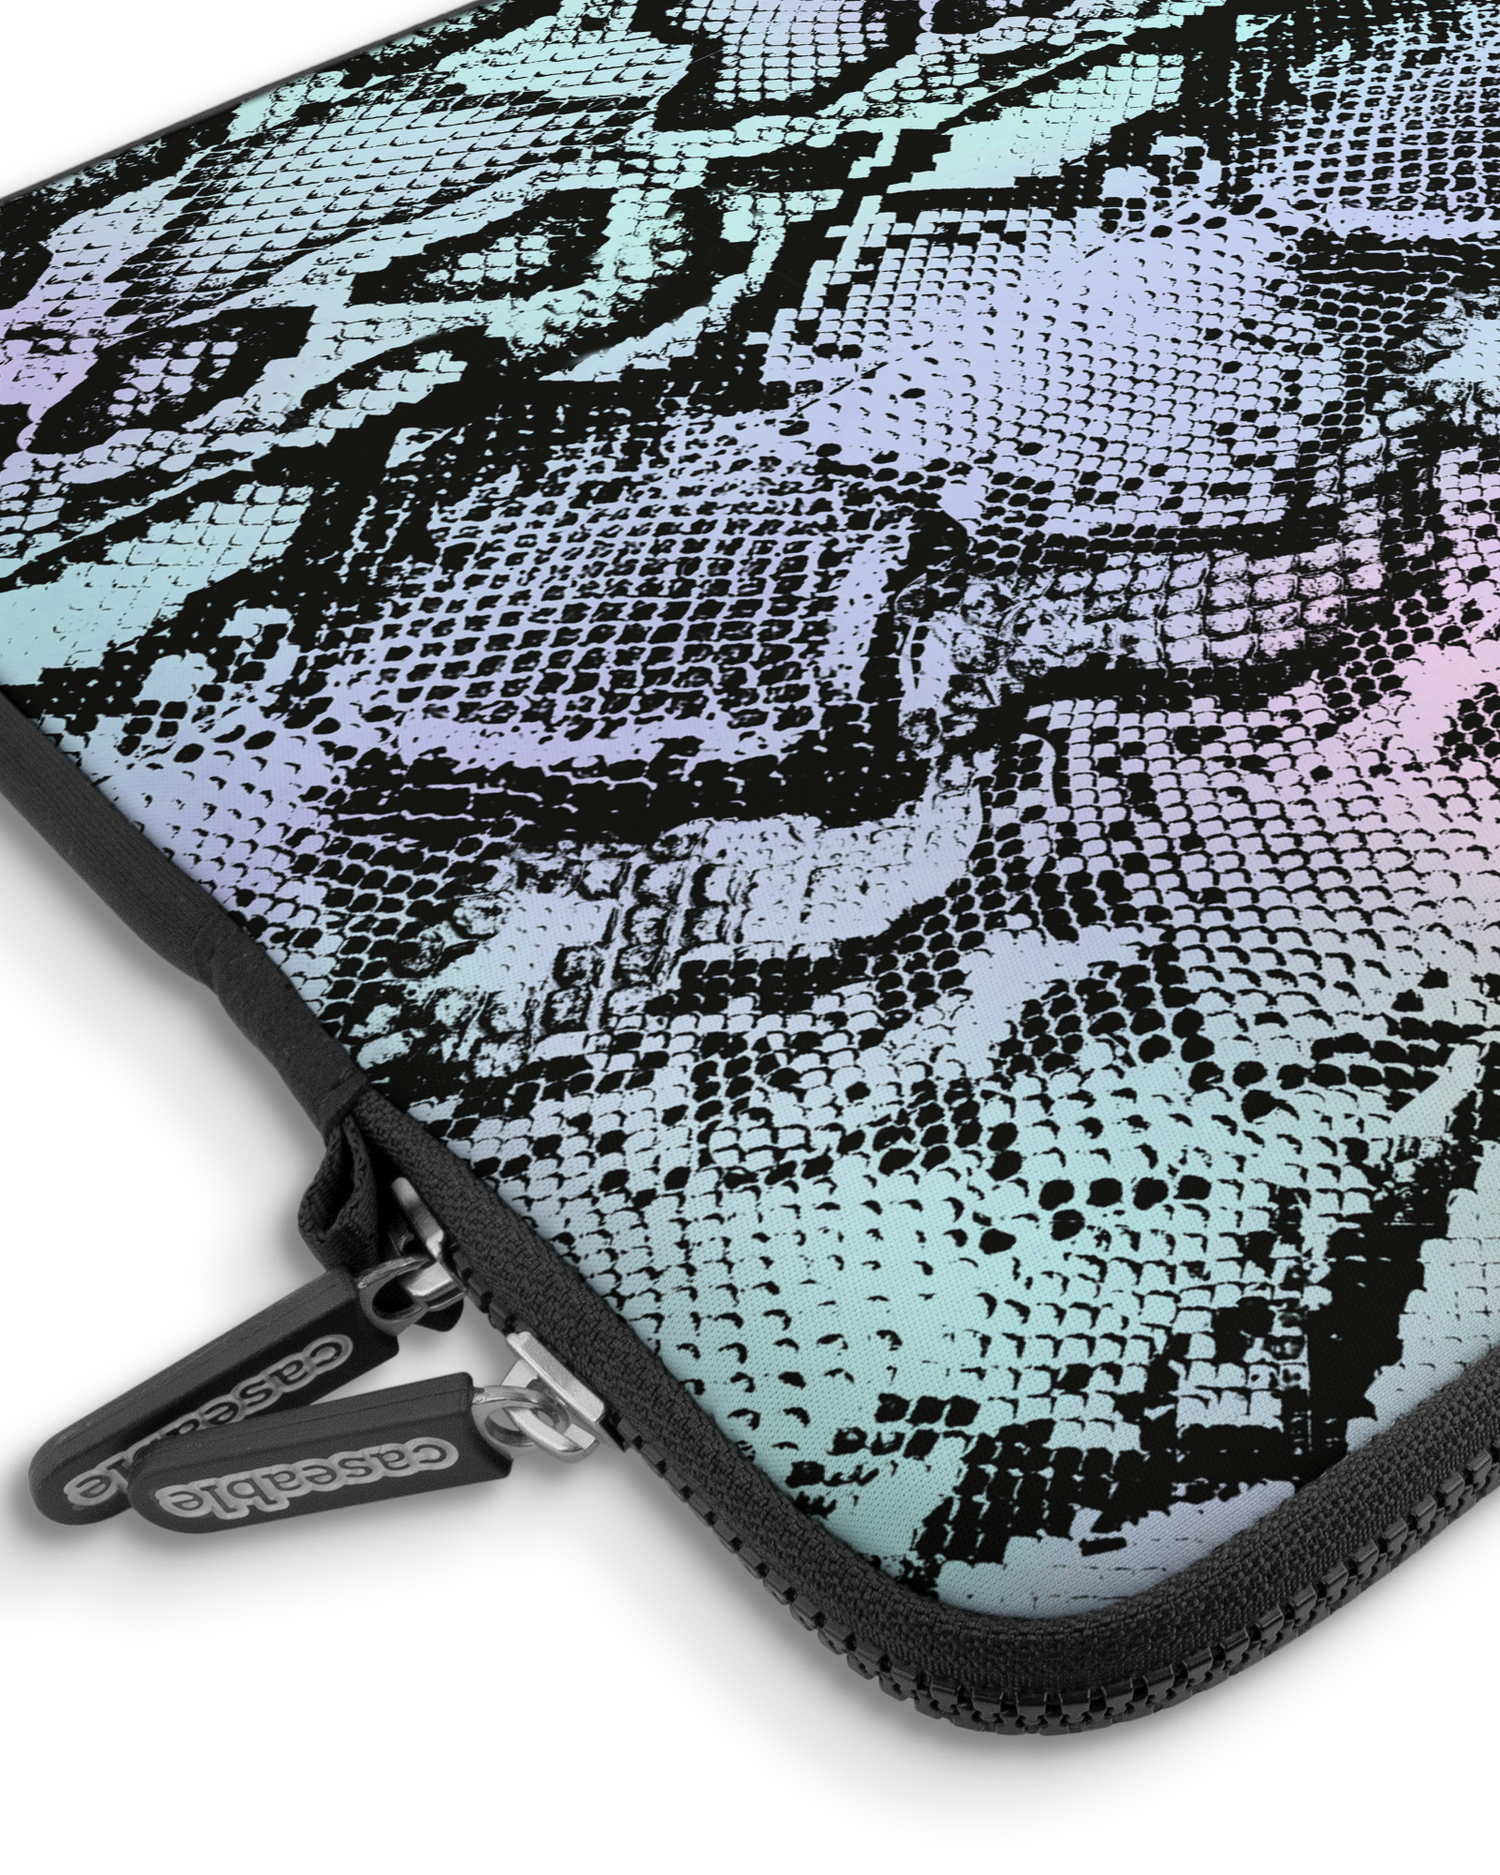 Groovy Snakeskin Premium Laptoptasche 15 Zoll mit Gerät im Inneren